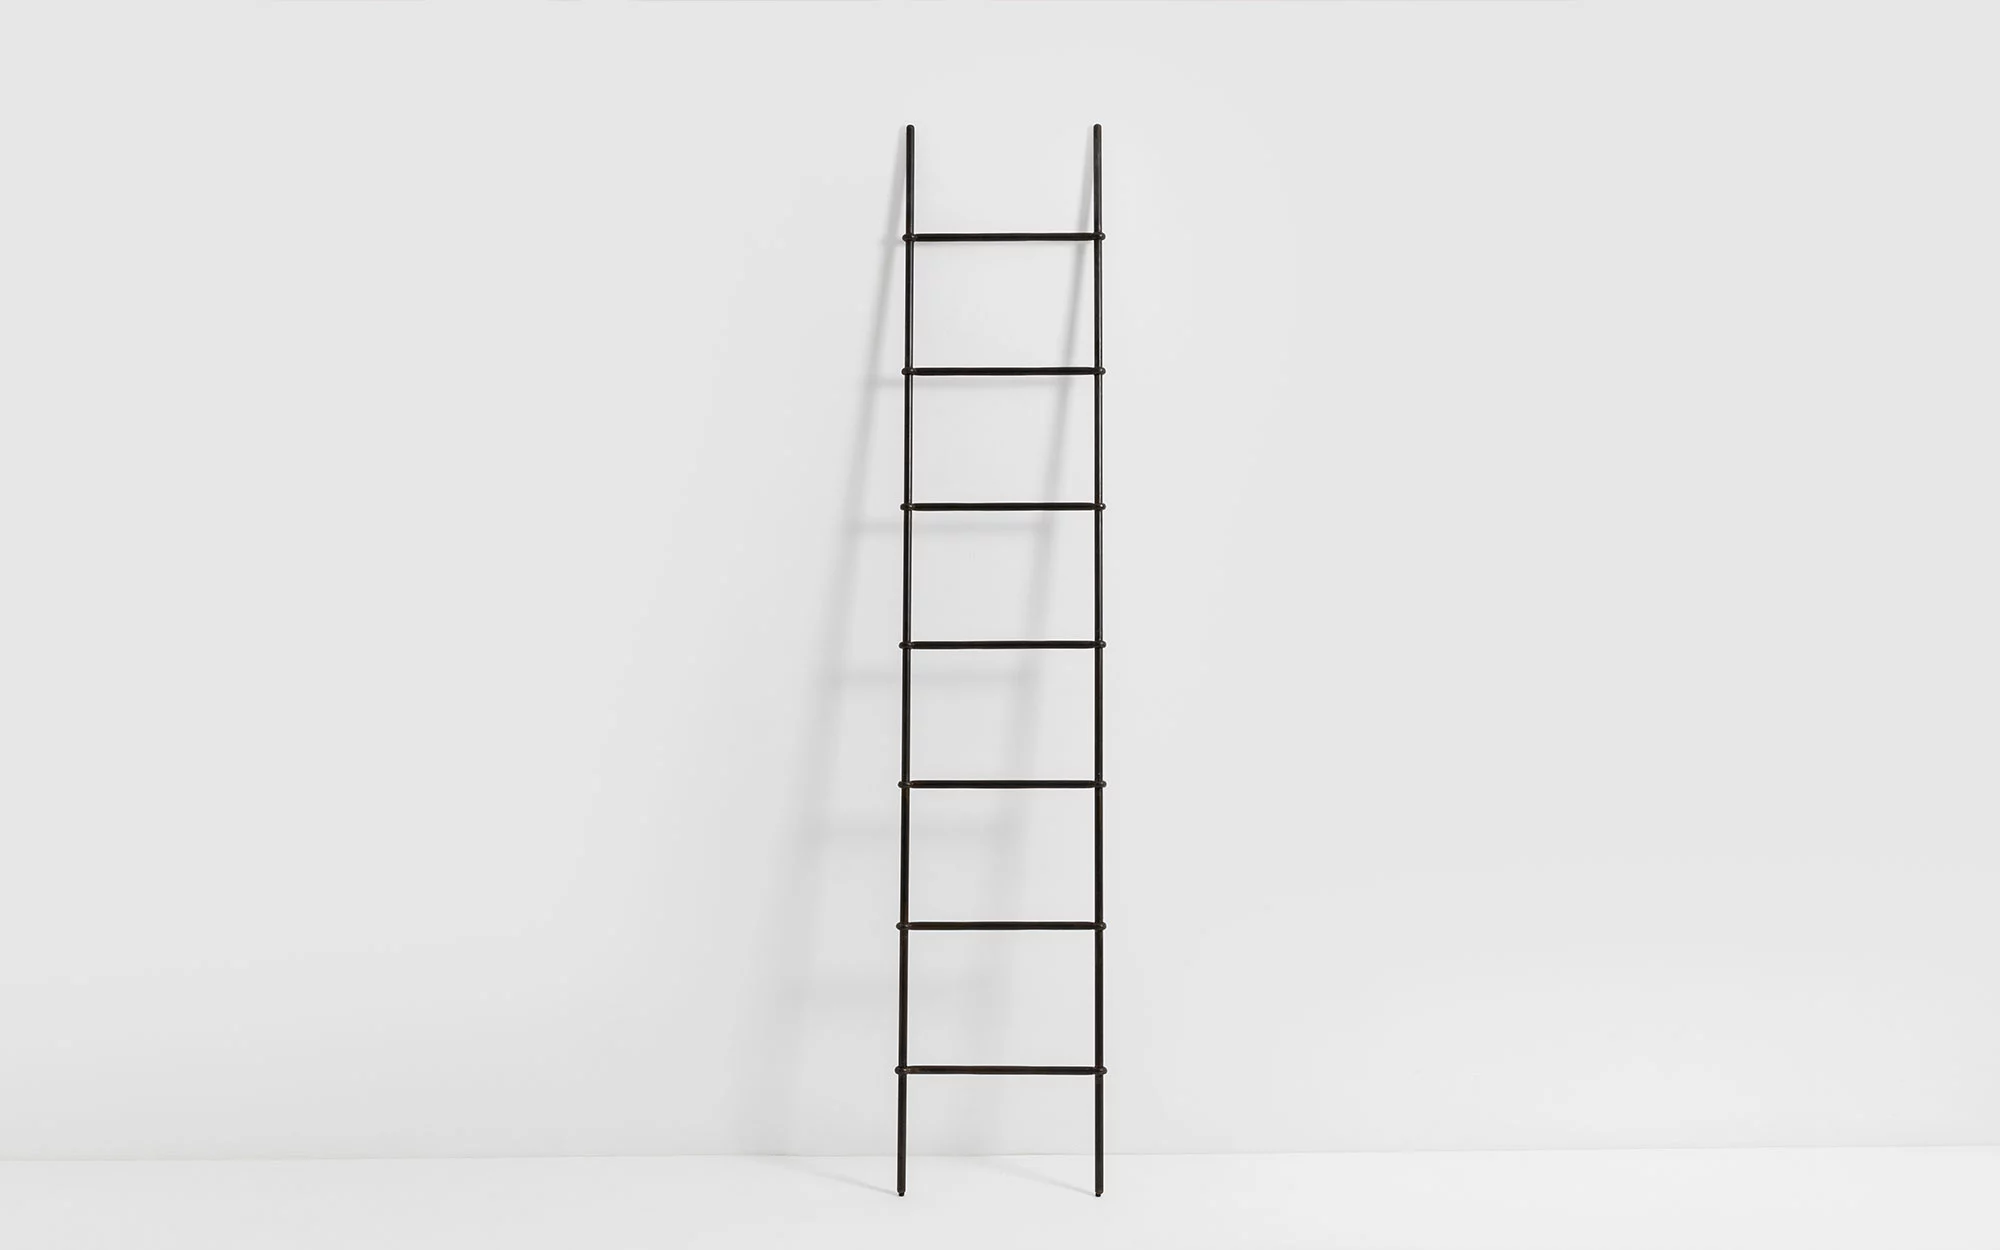 Ciel ladder - Ronan & Erwan Bouroullec - Pendant light - Galerie kreo